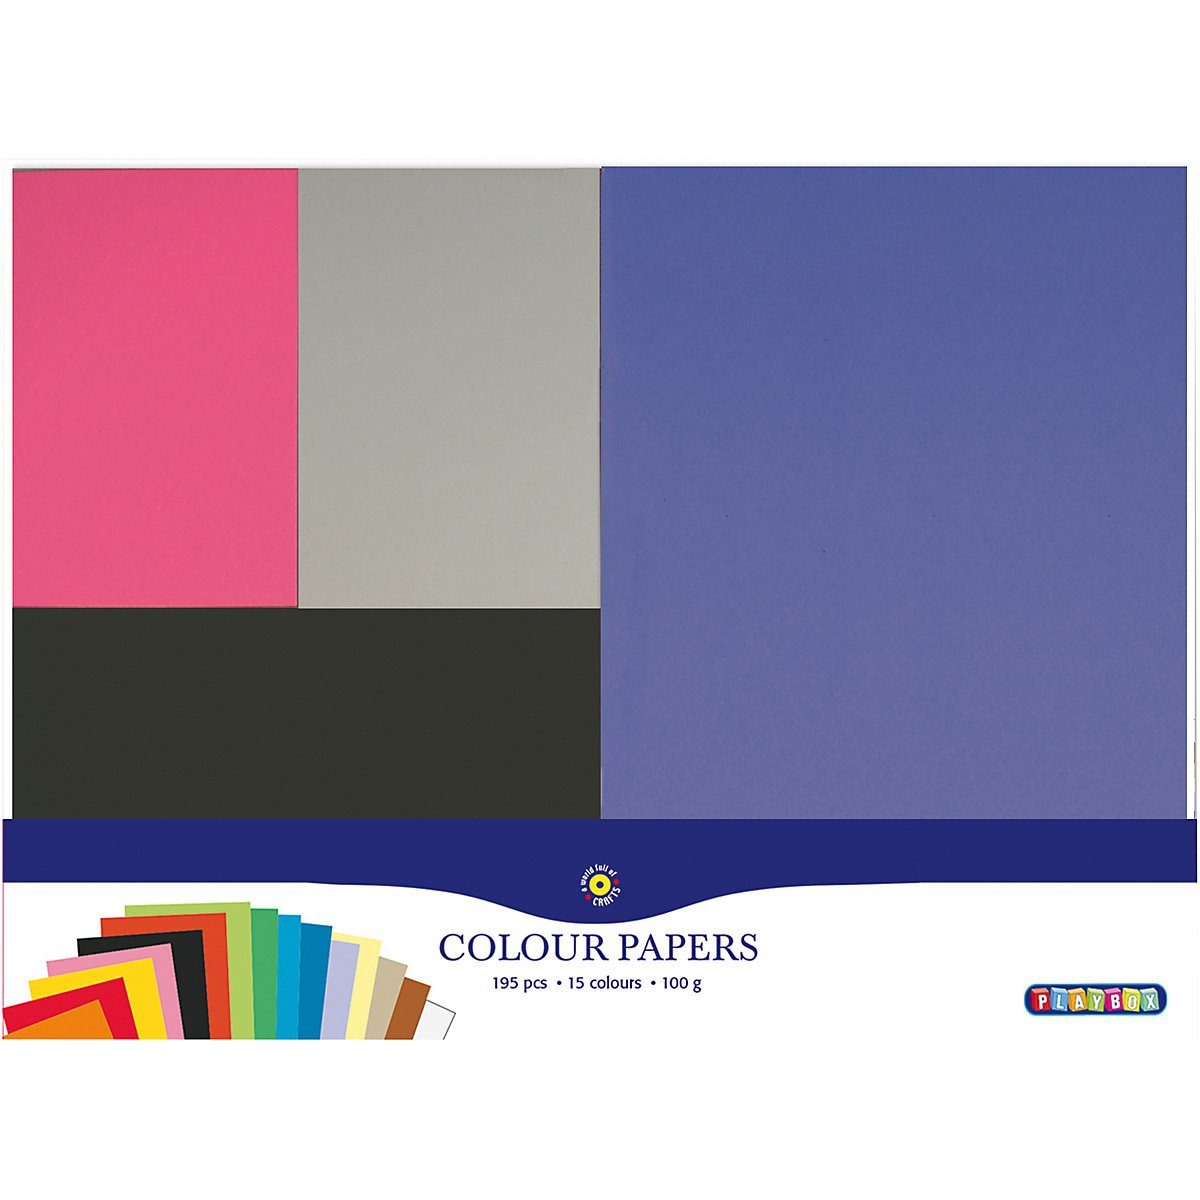 Playbox Papierdekoration Sortiment Buntes Papier, 195 Blatt in 15 Farben